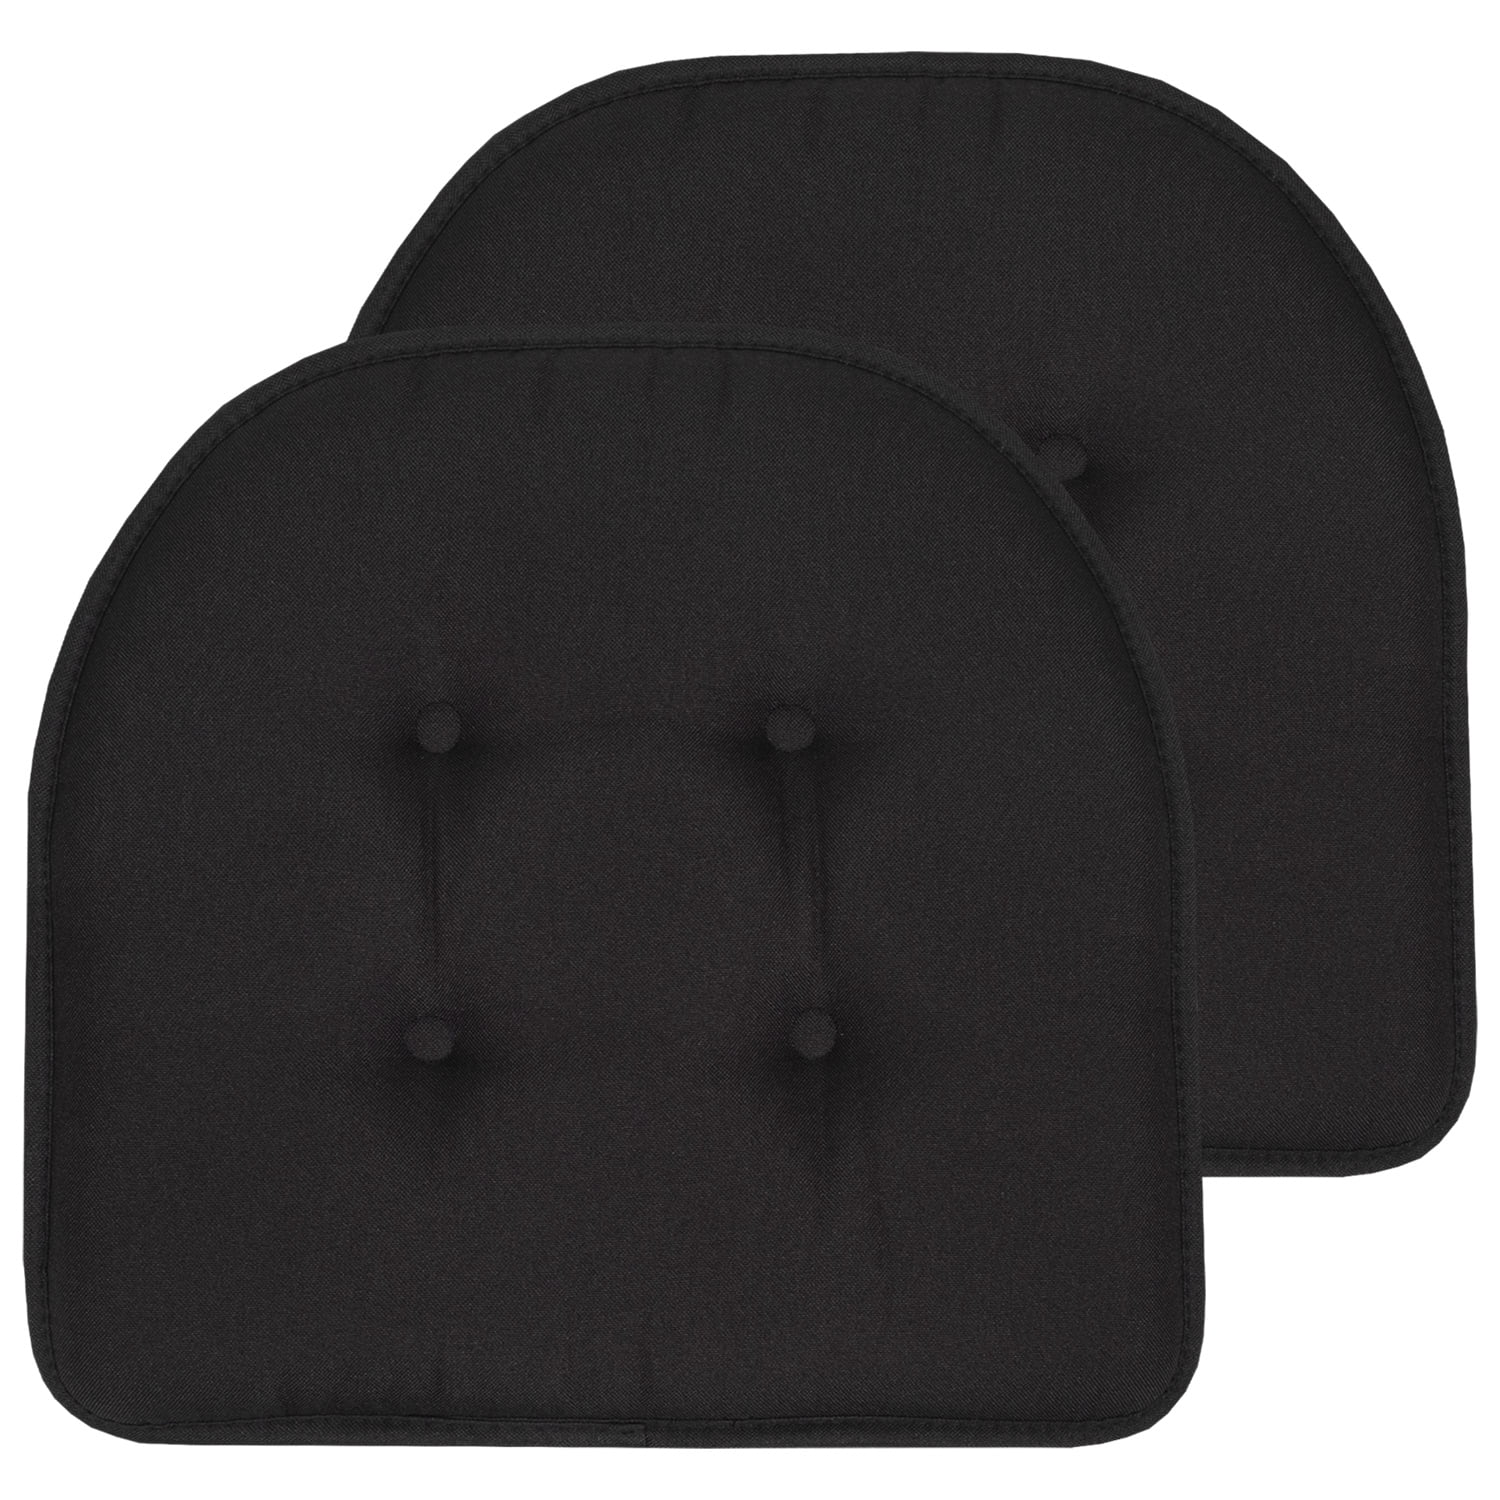 Black U-shaped Seat Cushion With Handle